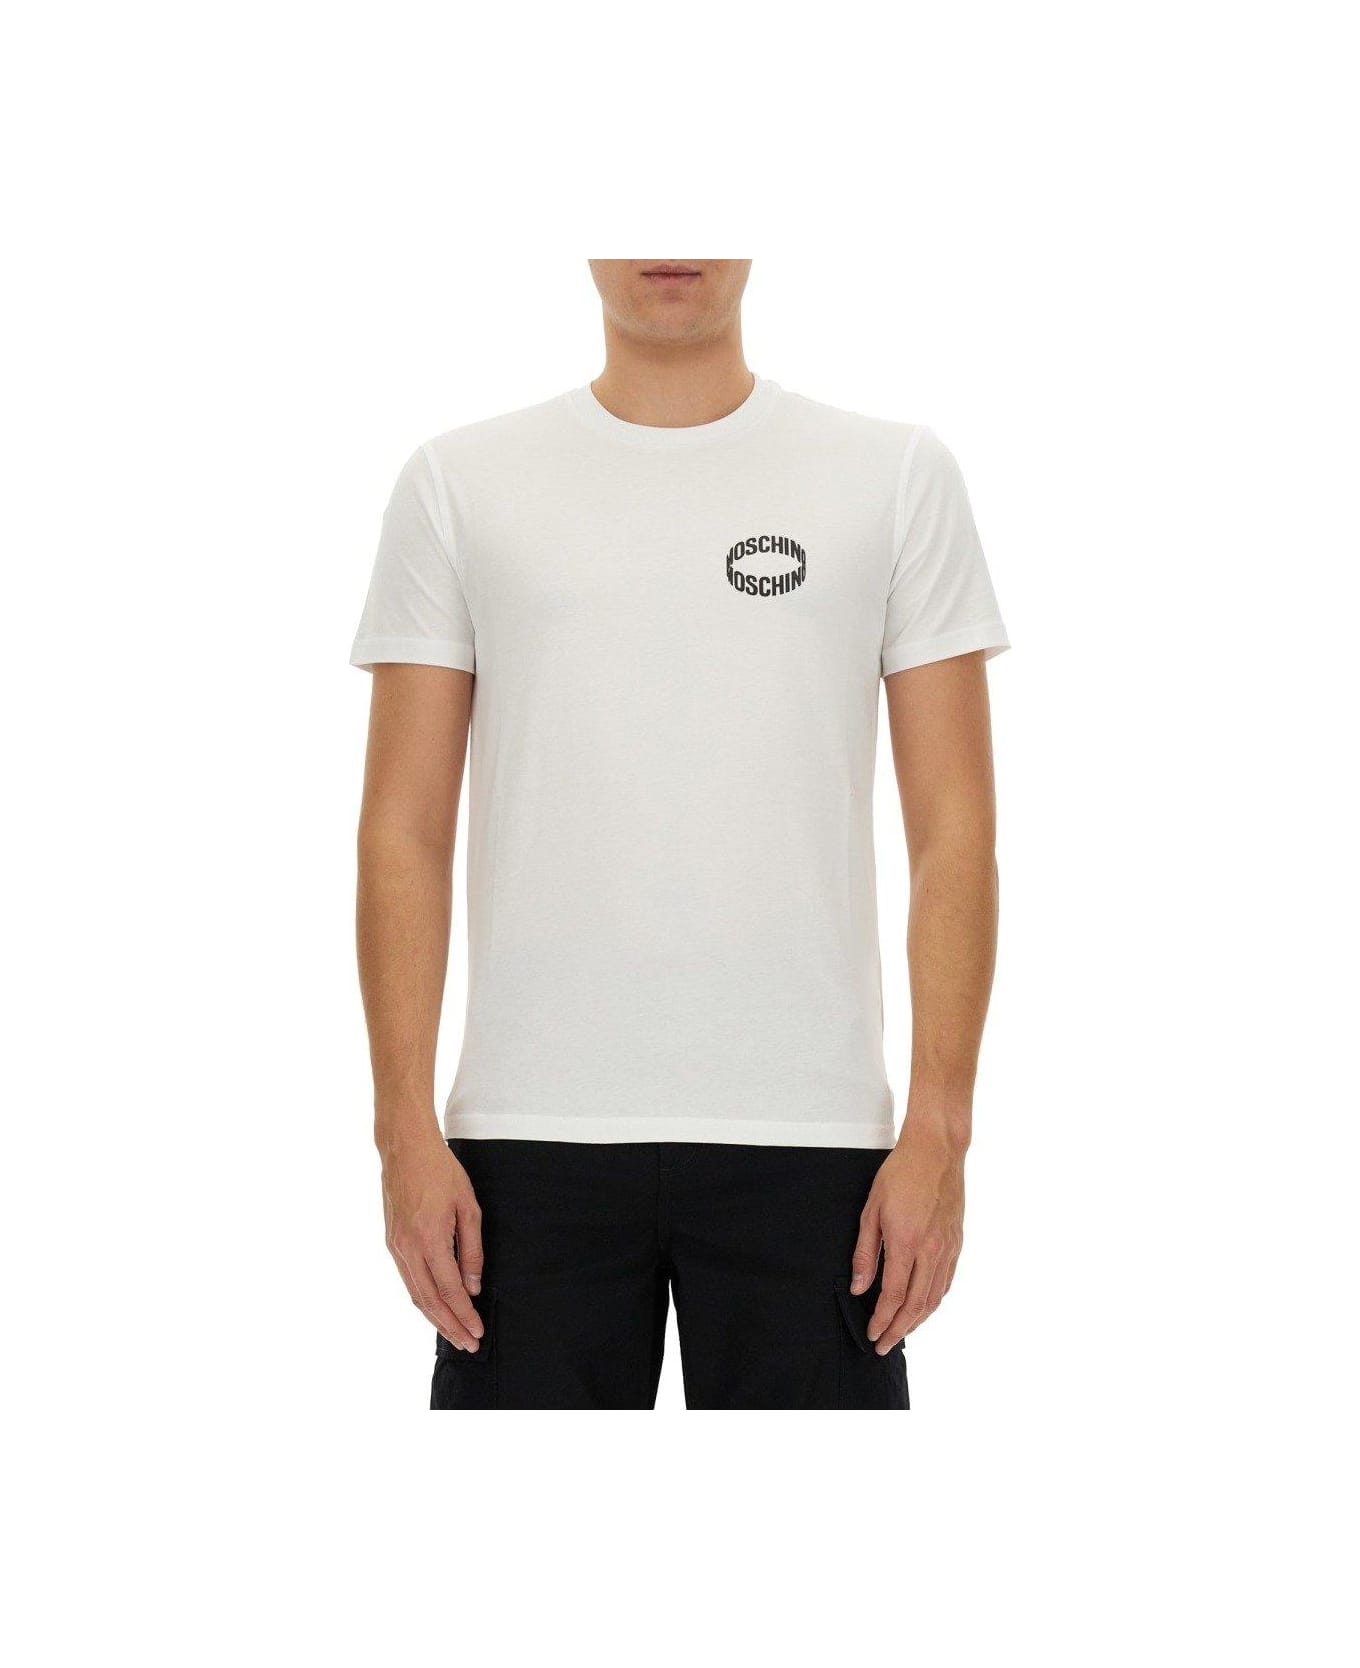 Moschino Logo Printed Crewneck T-shirt - White